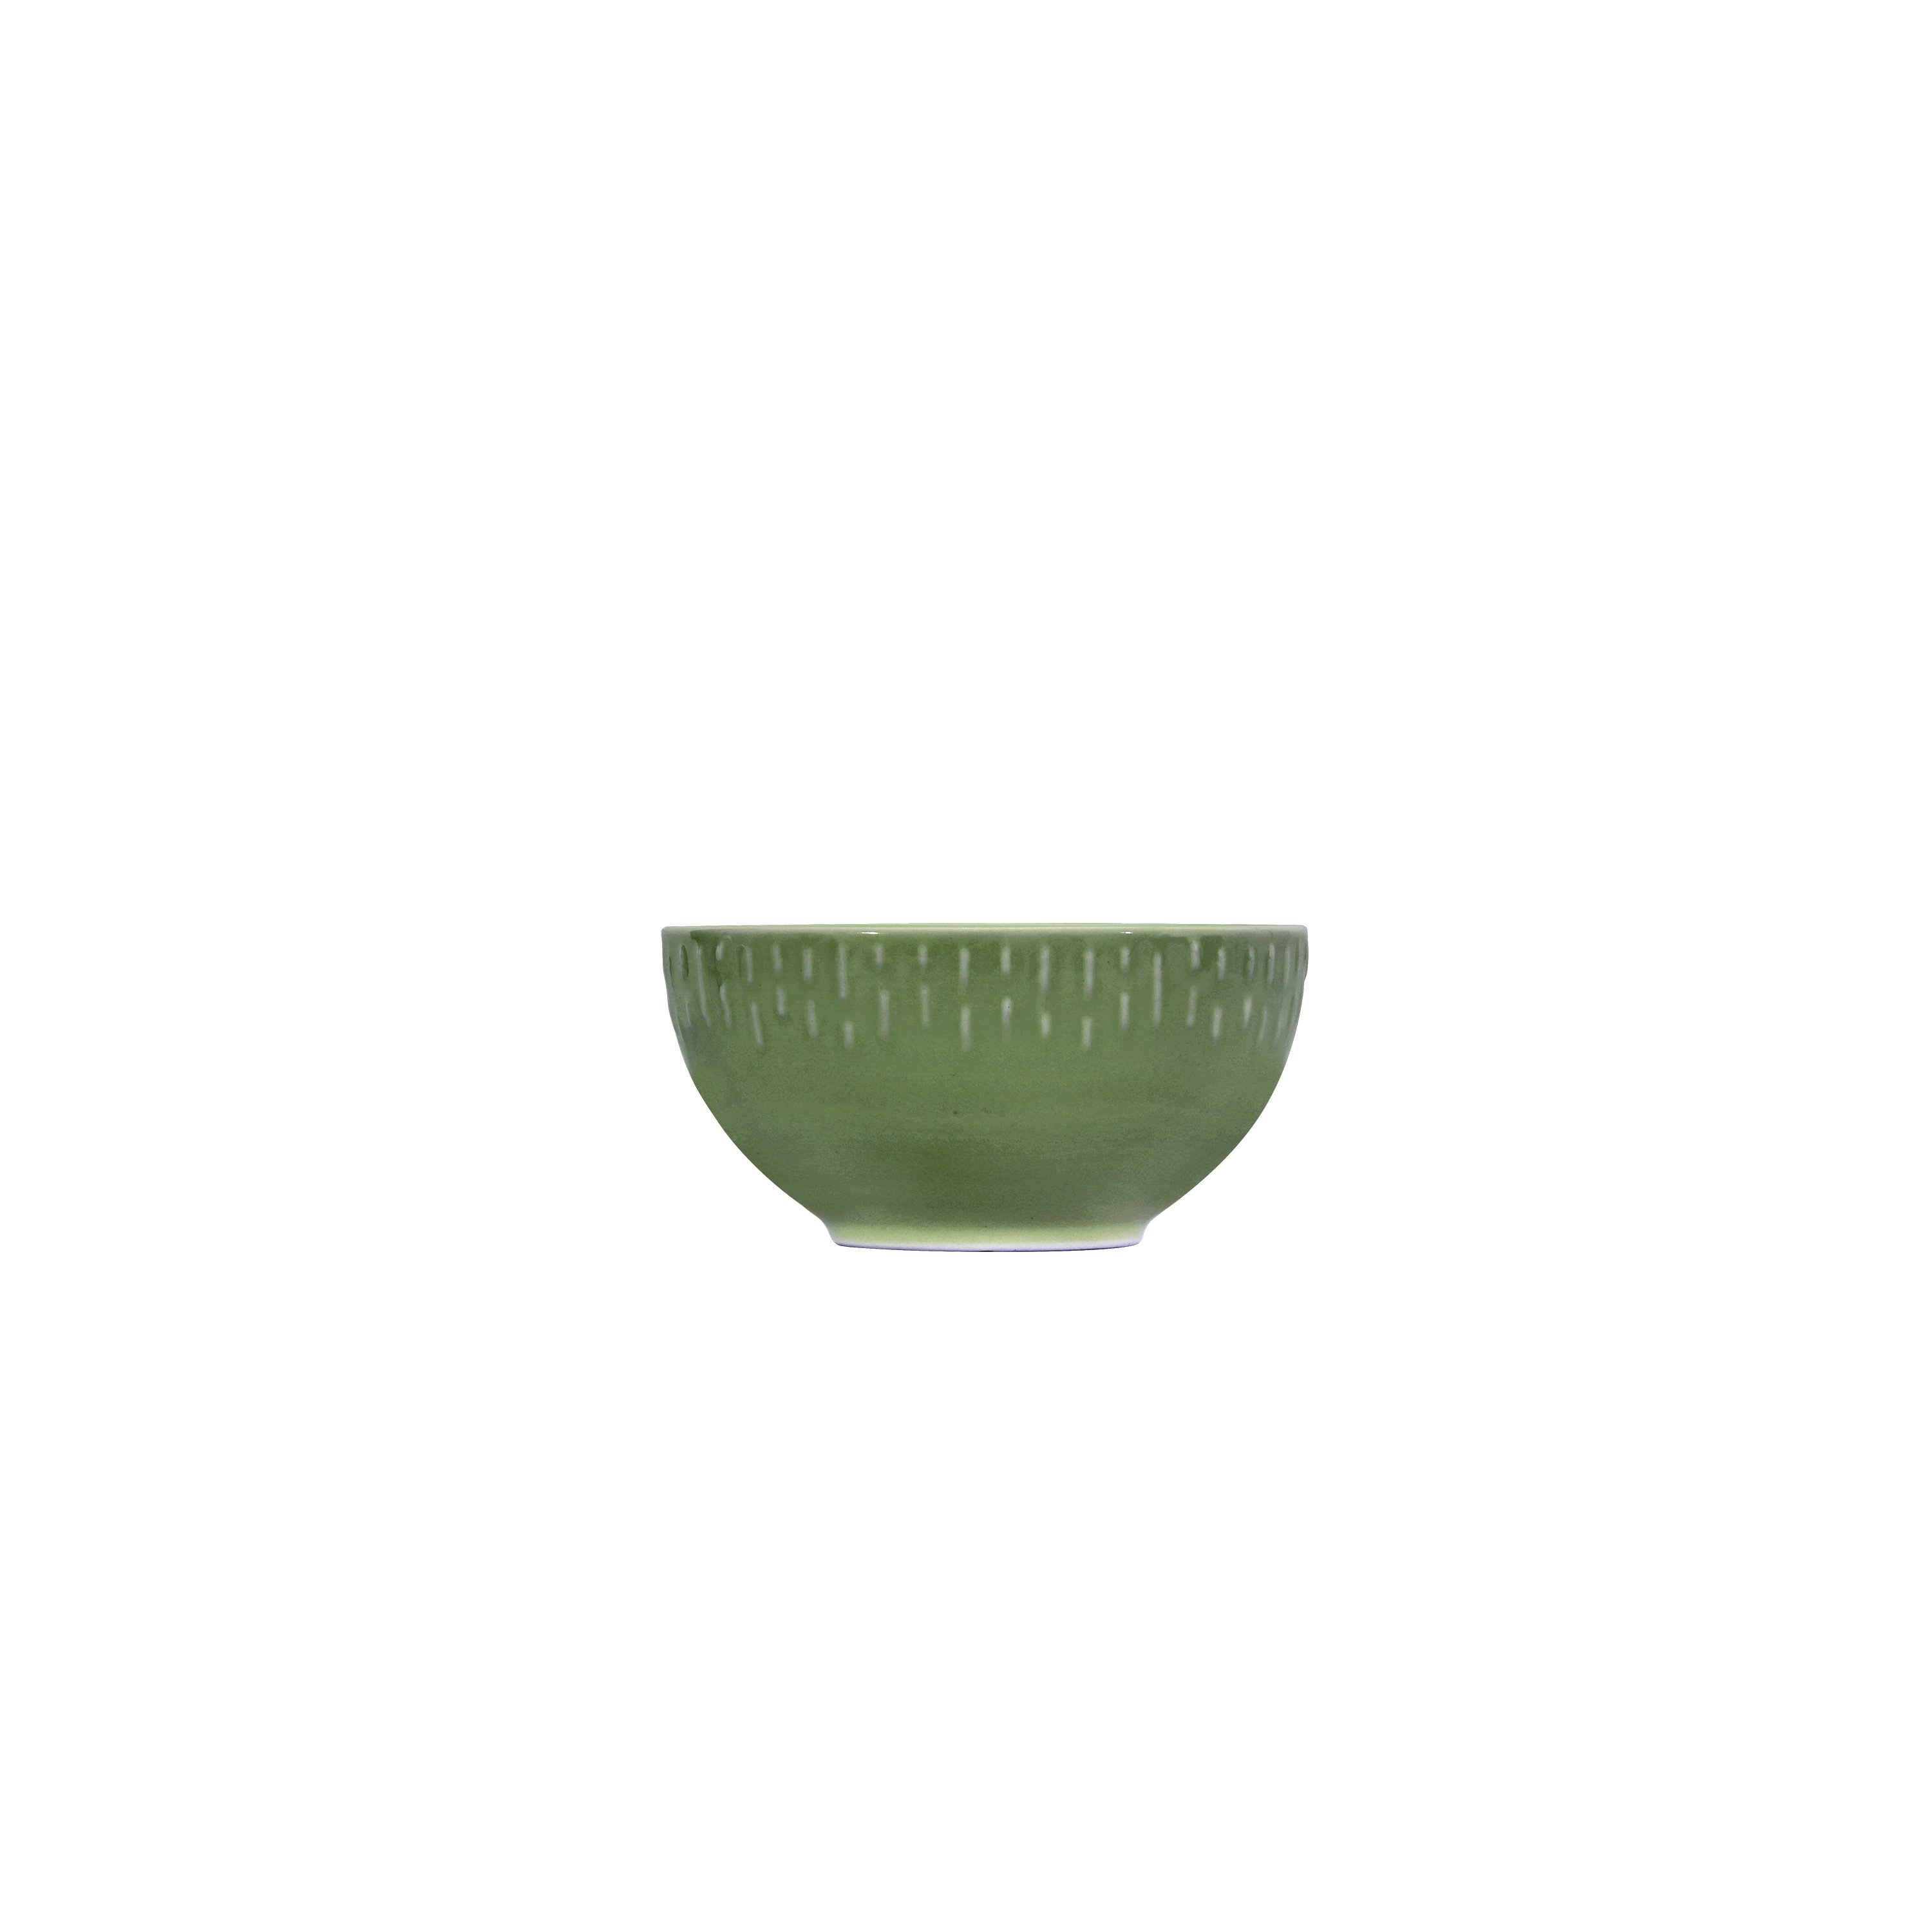 Aida - Life in colour - Confetti - Olive bowl w/relief porcelain (13407)